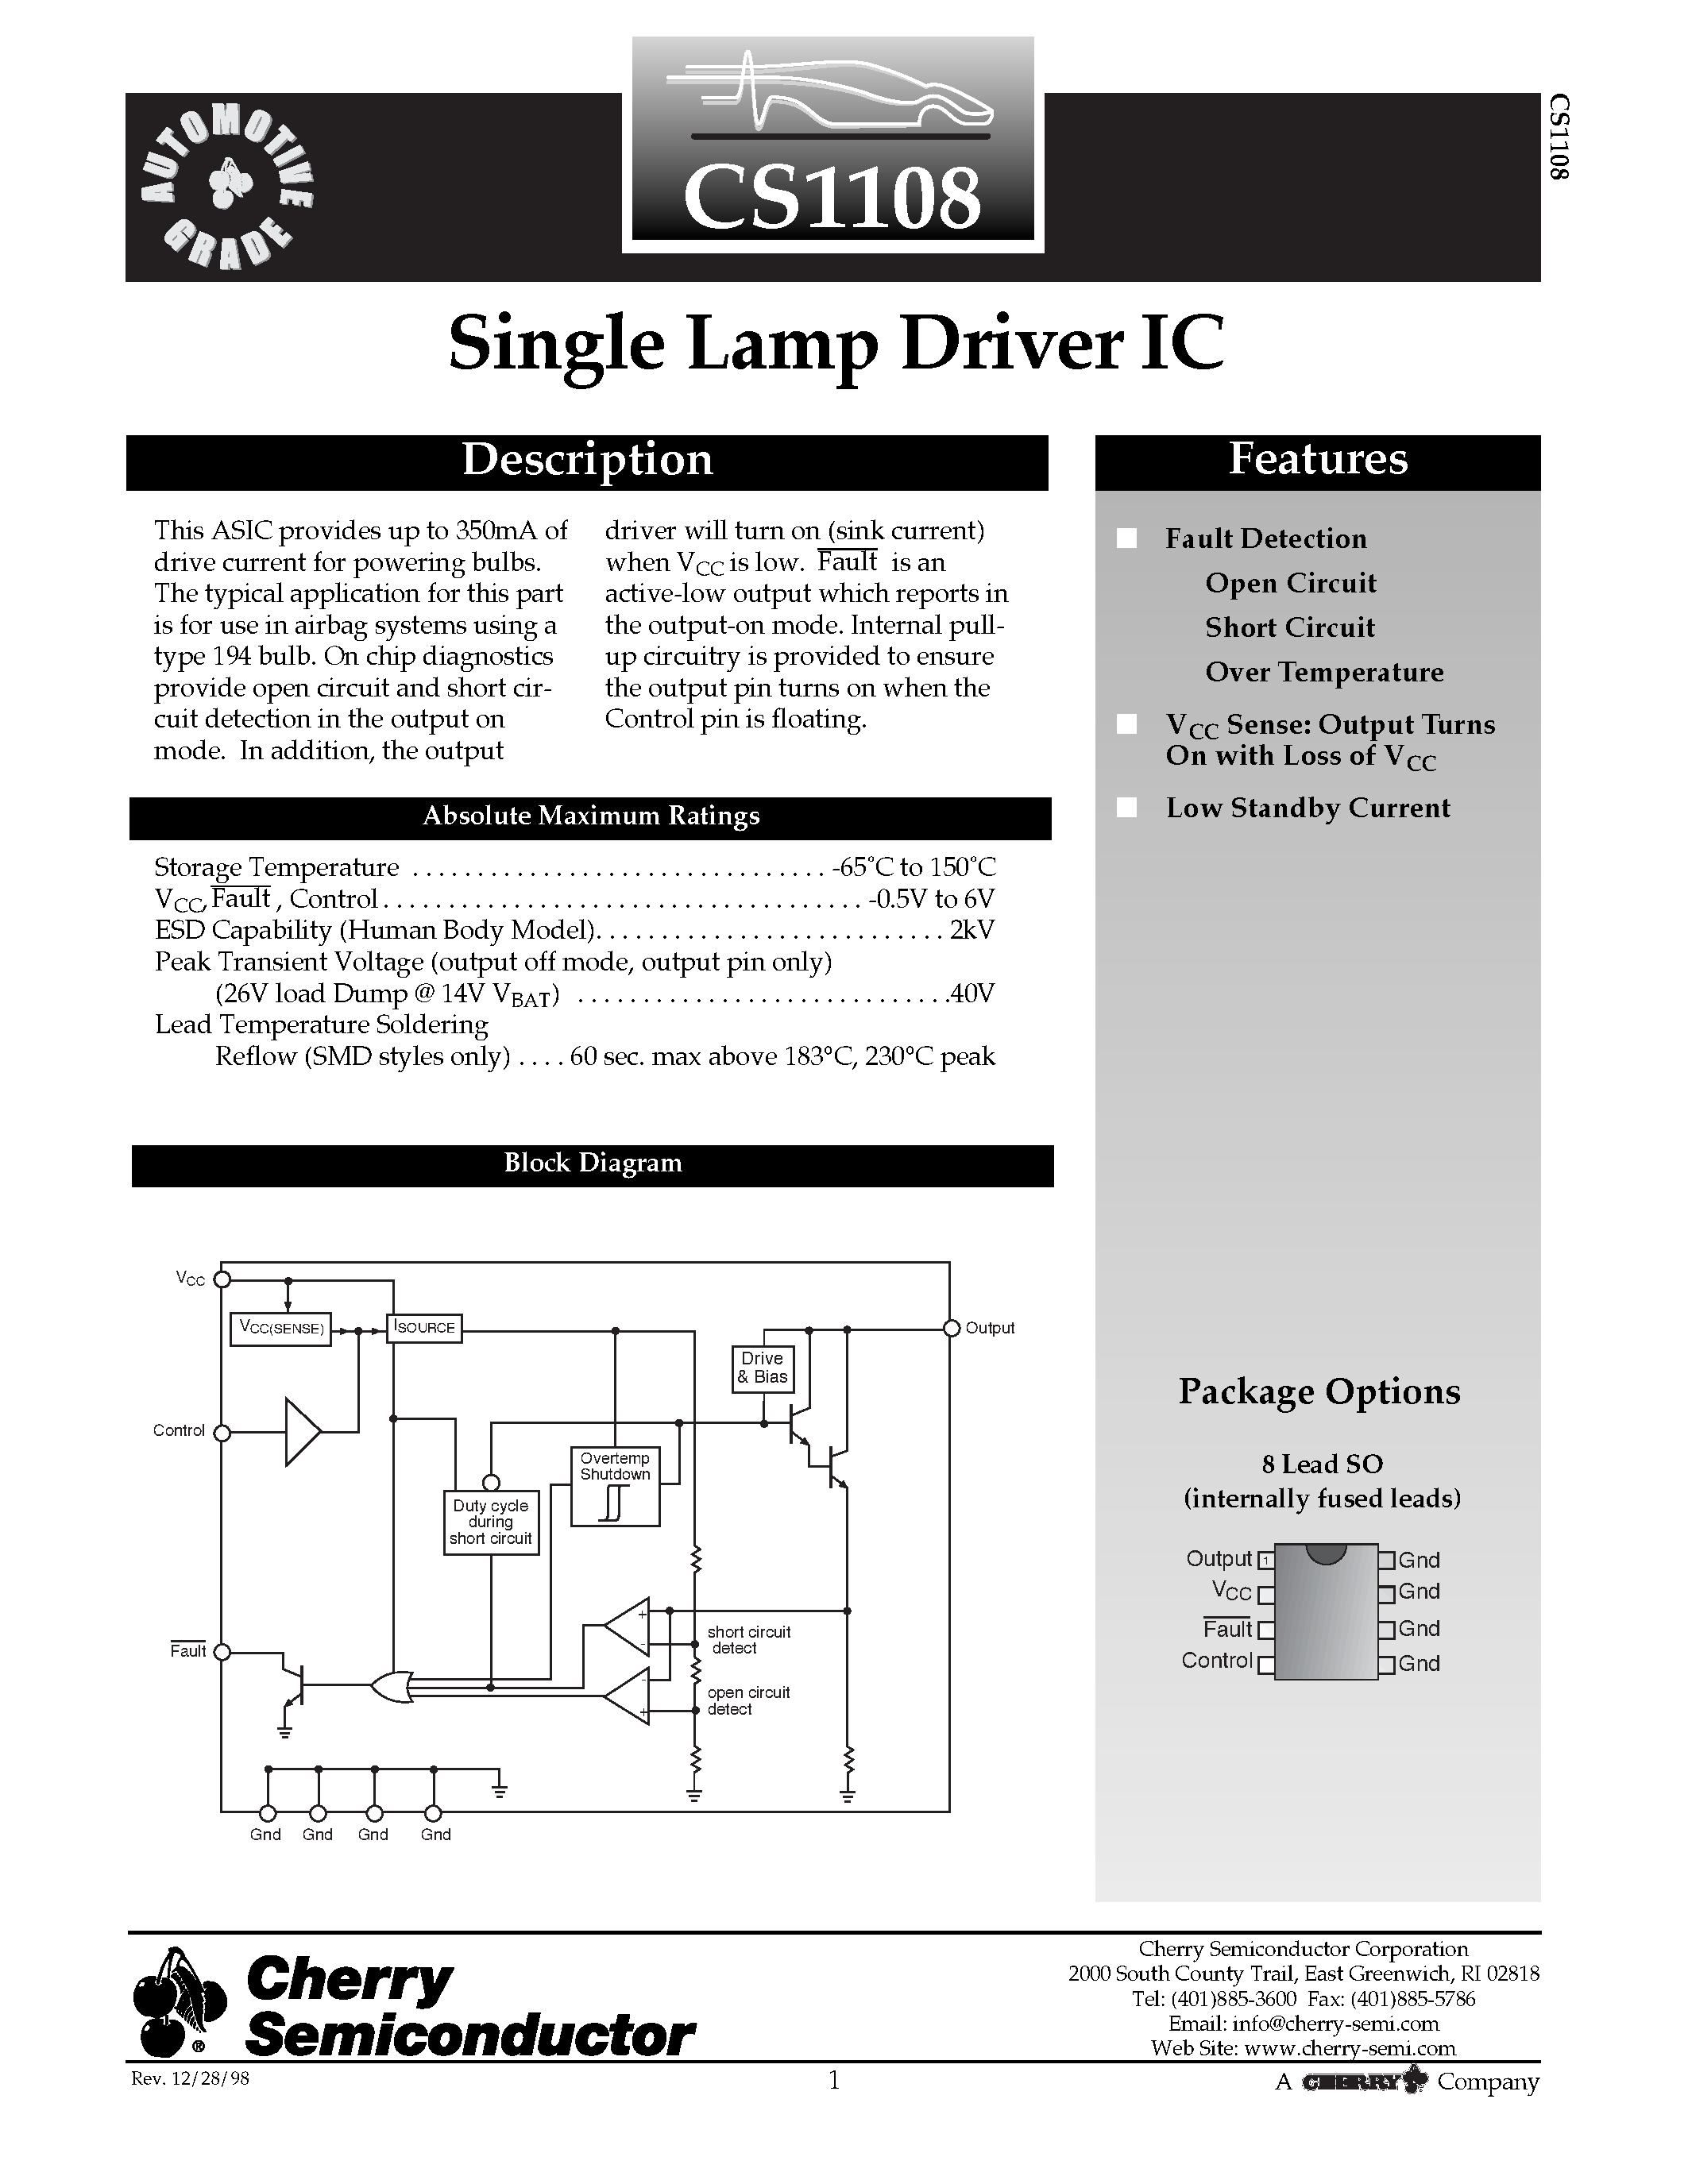 Datasheet CS1108 - Single Lamp Driver IC page 1